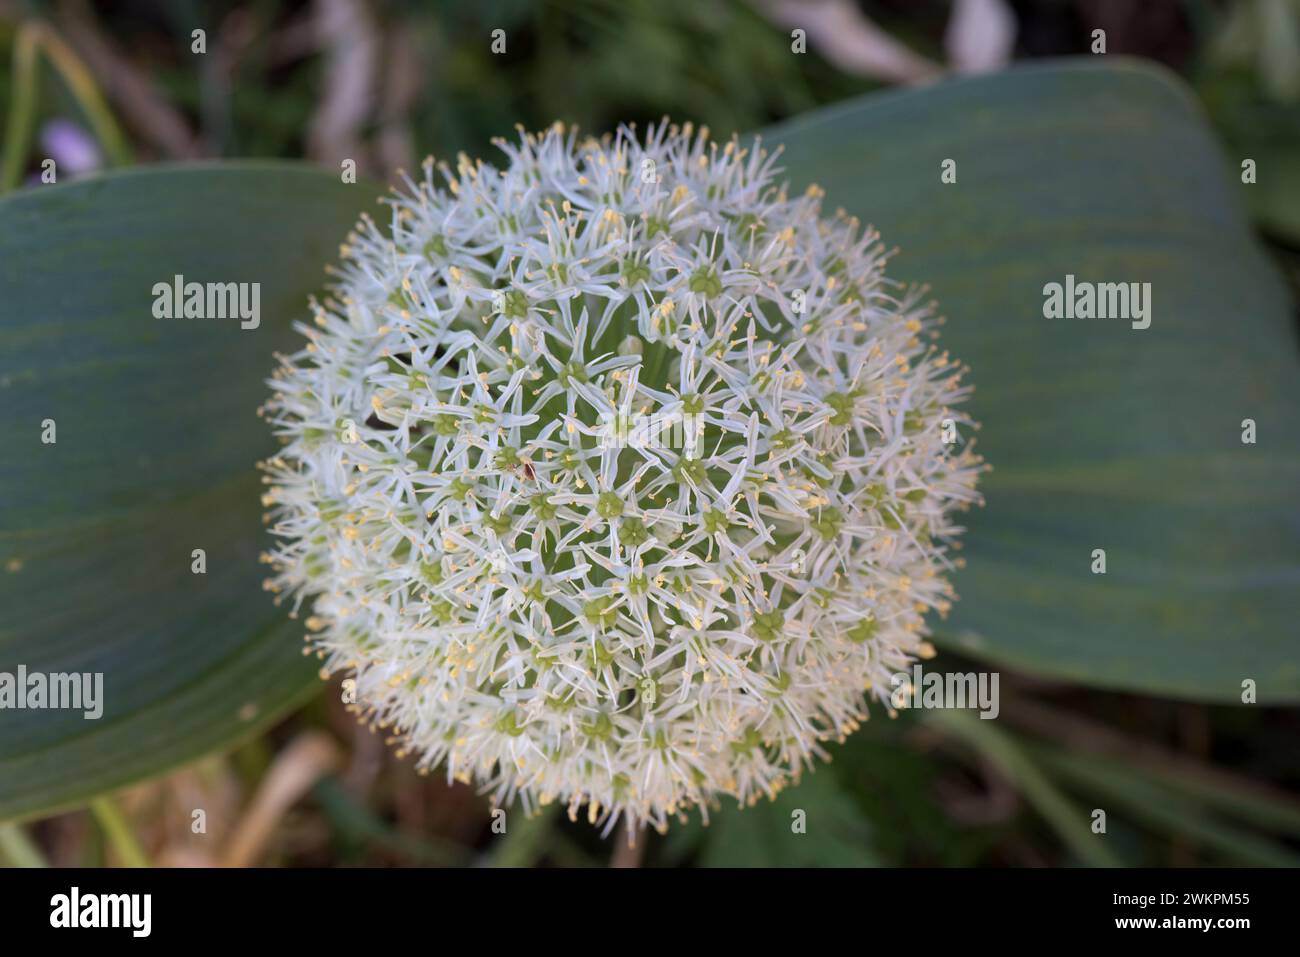 Turkistan or ornamental onion (Allium karataviense) spherical white umbel flower head on a short stem with two broad grey-green leaves. Stock Photo